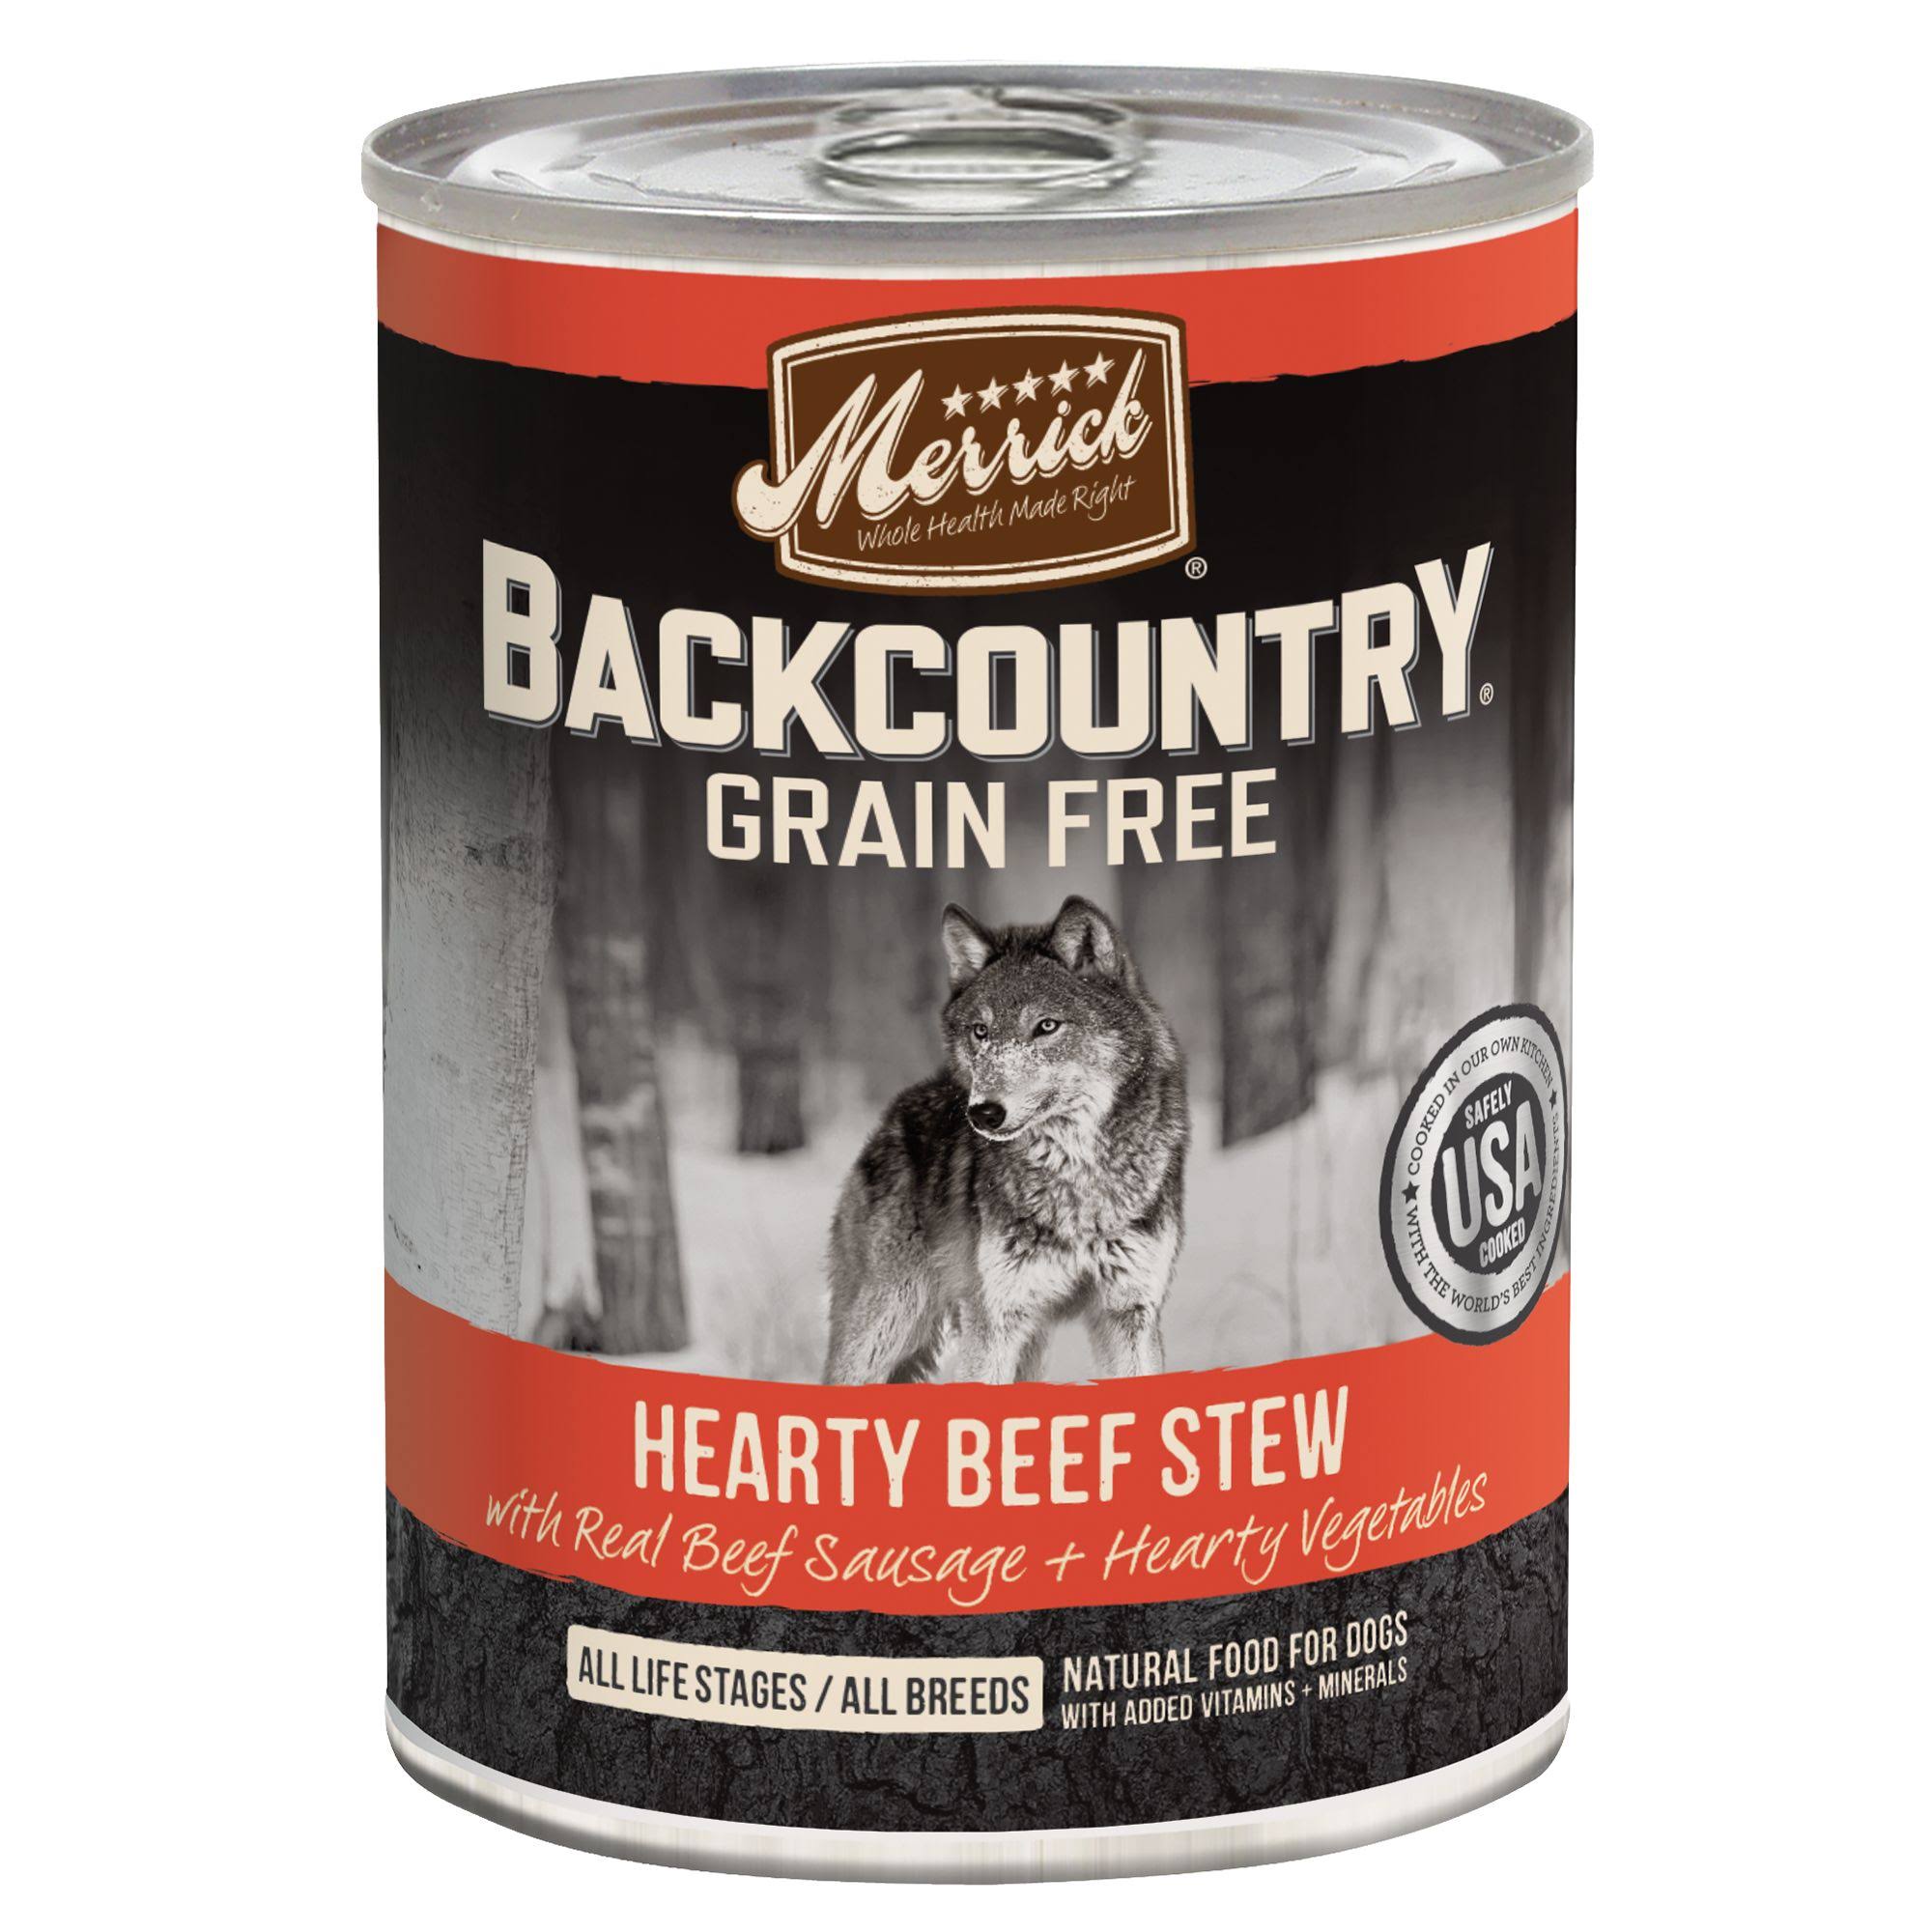 Merrick Backcountry Dog Food - Hearty Beef Stew